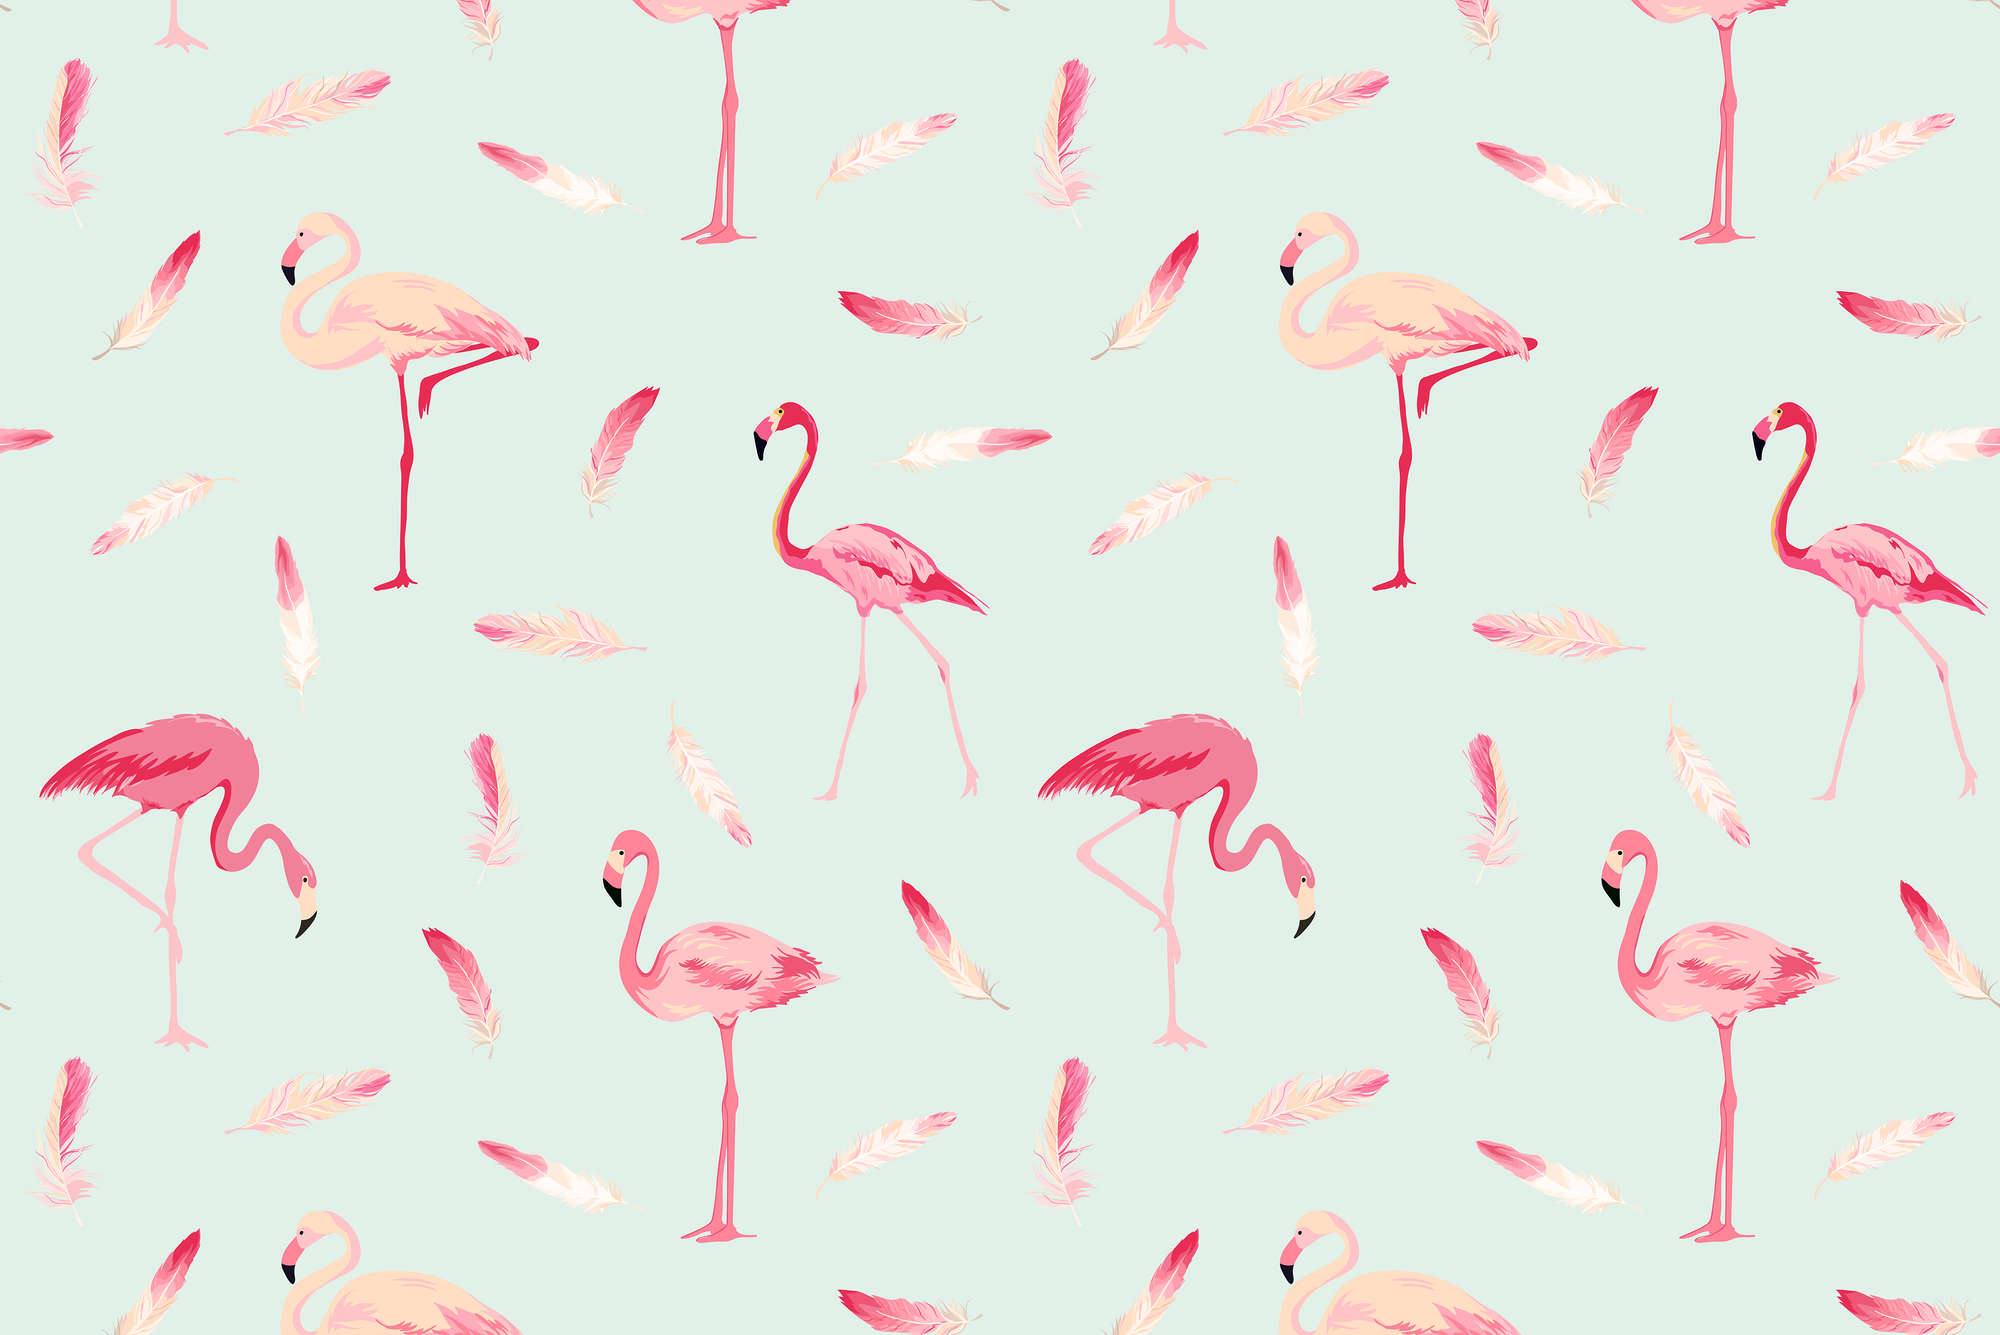             Grafik Fototapete Flamingos und Federn auf Premium Glattvlies
        